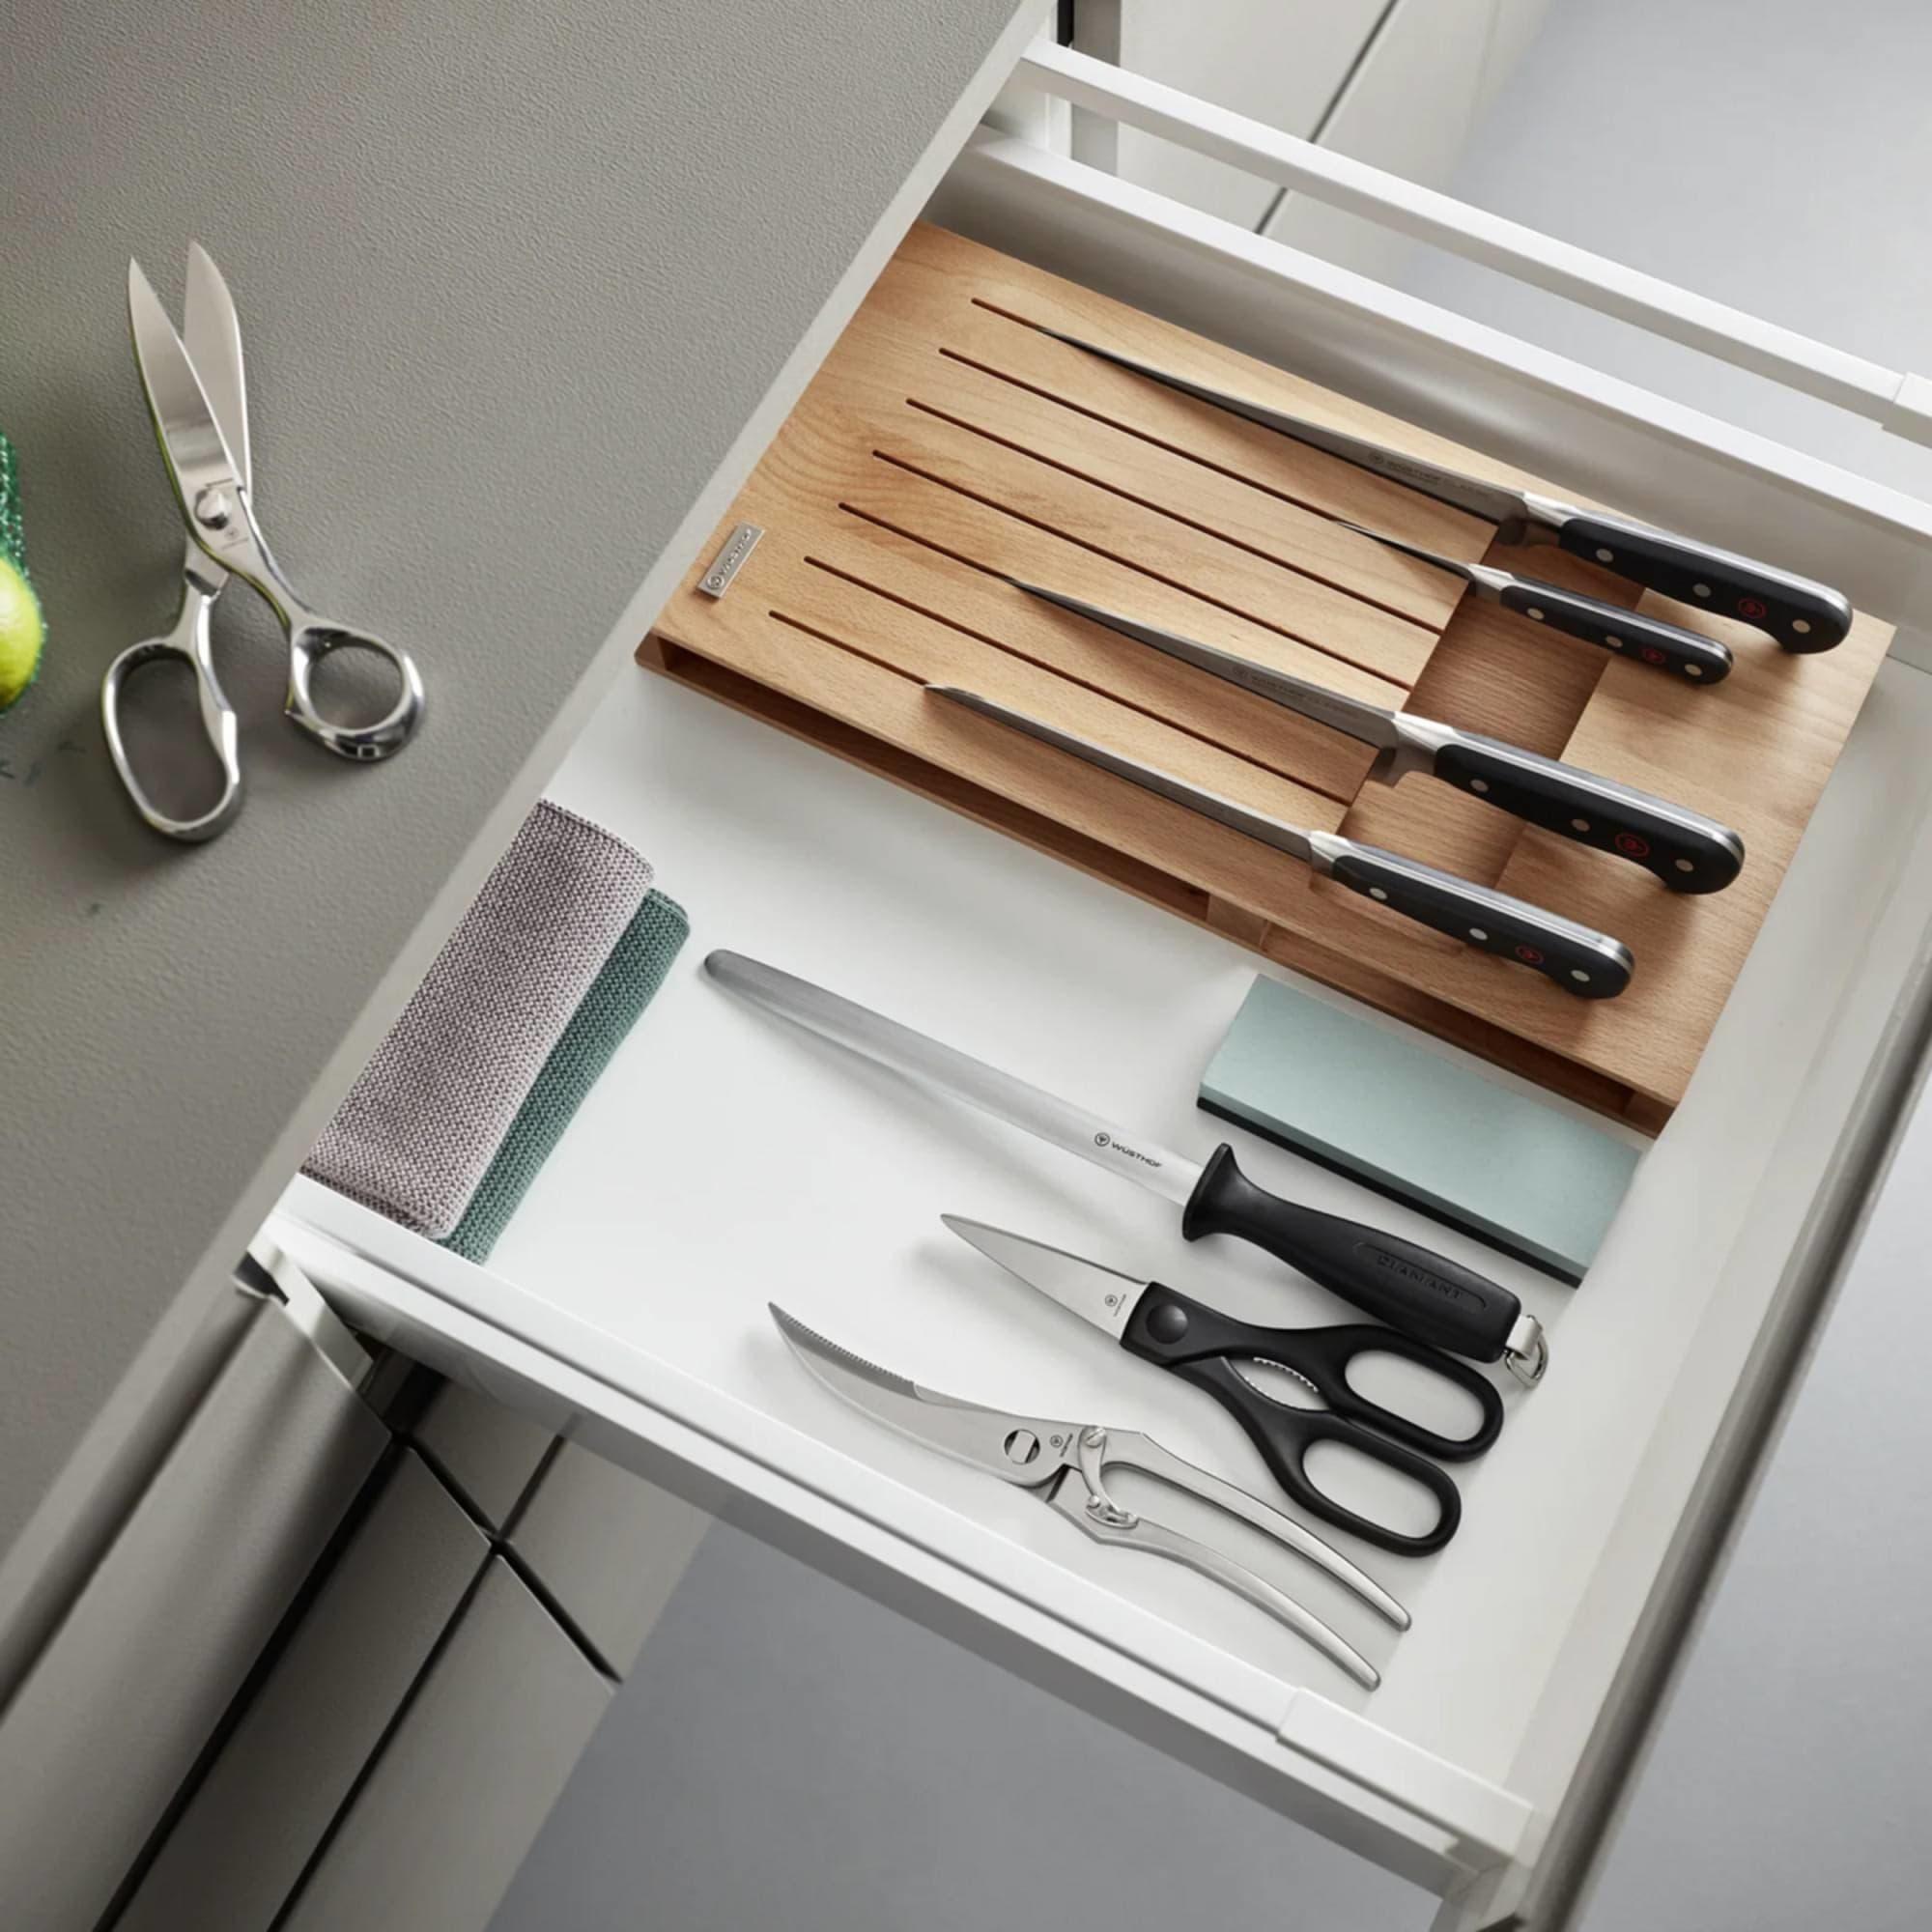 Wusthof In-Drawer Knife Organiser 43x22.2cm Brown Image 5